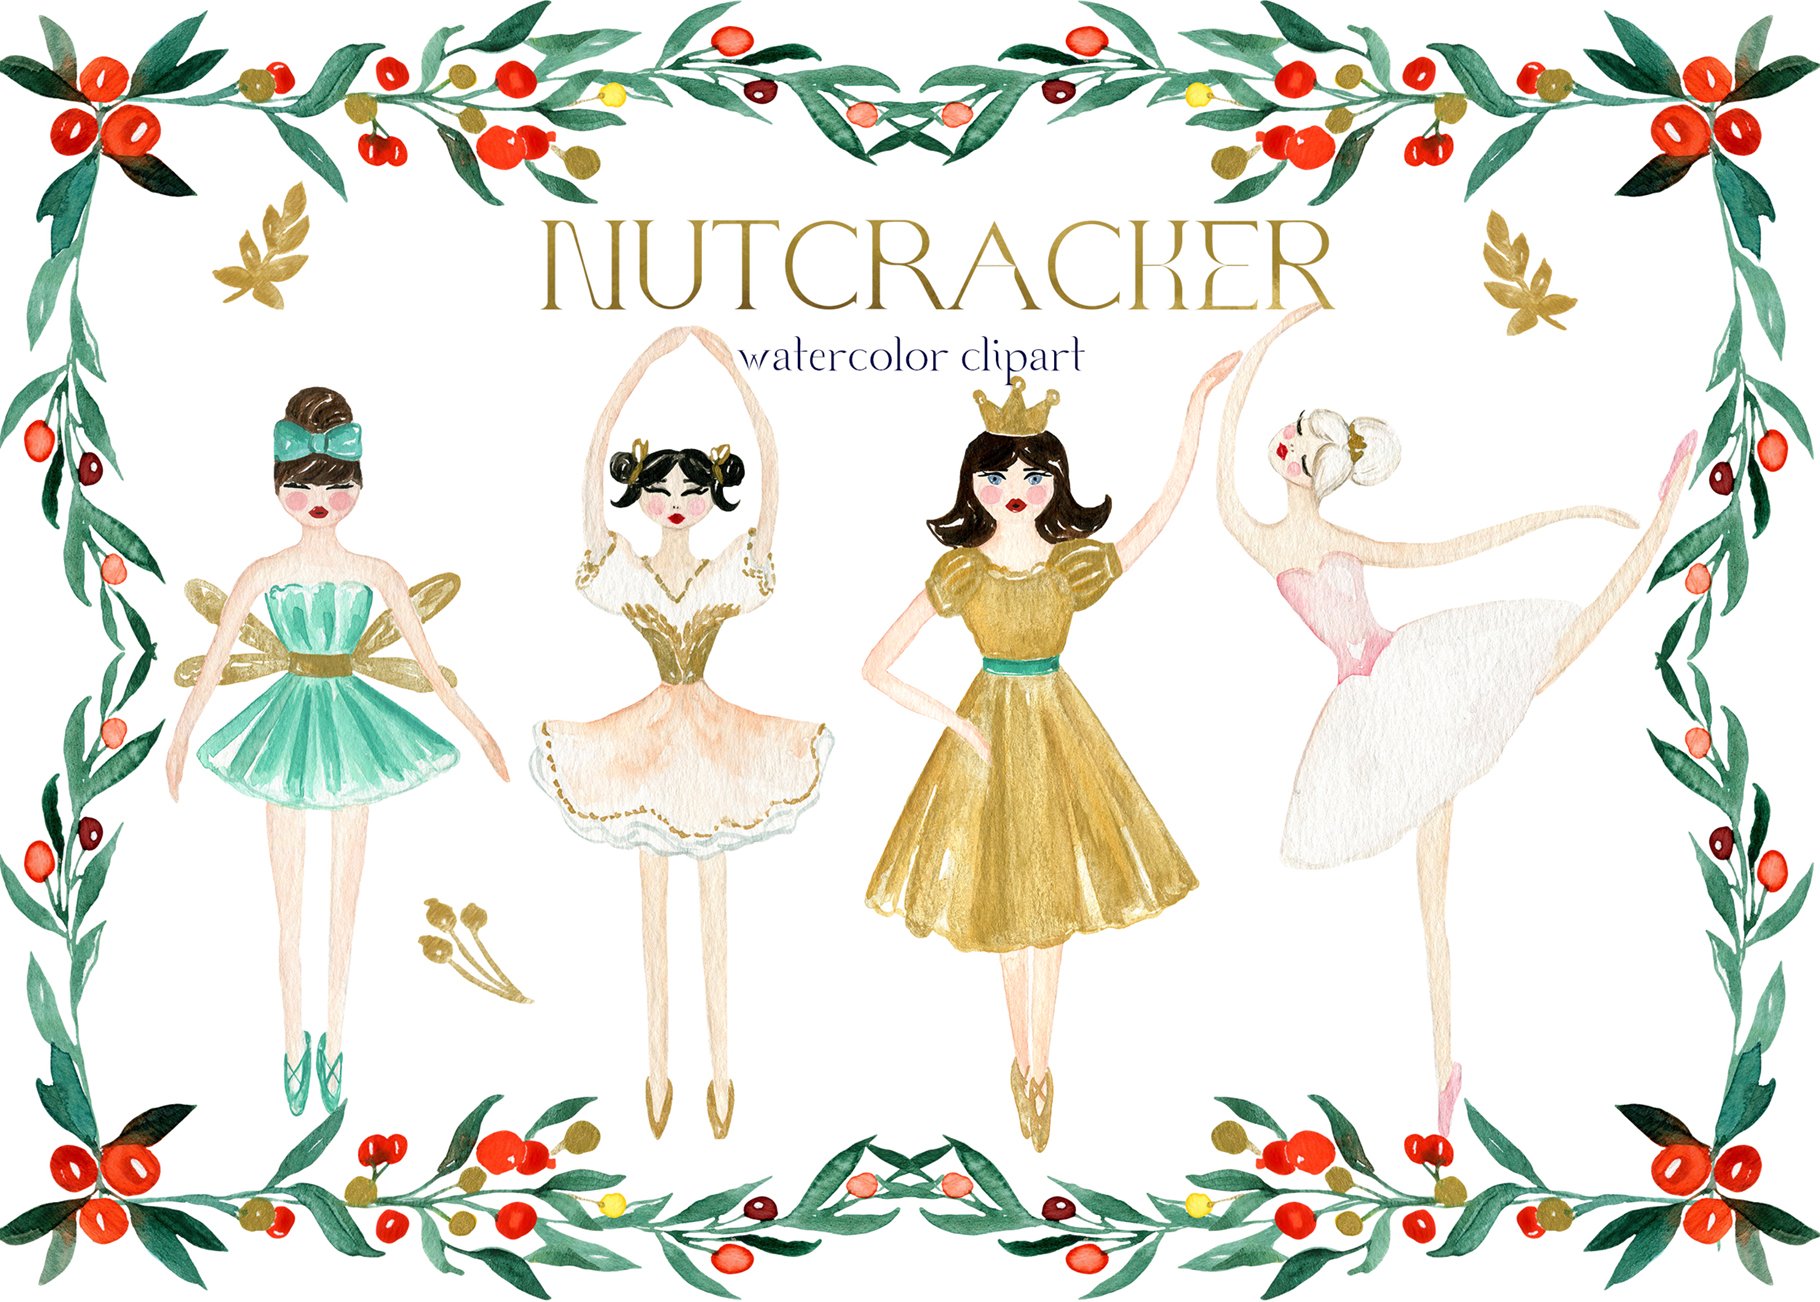 The Nutcracker Ballet Watercolor Illustrations